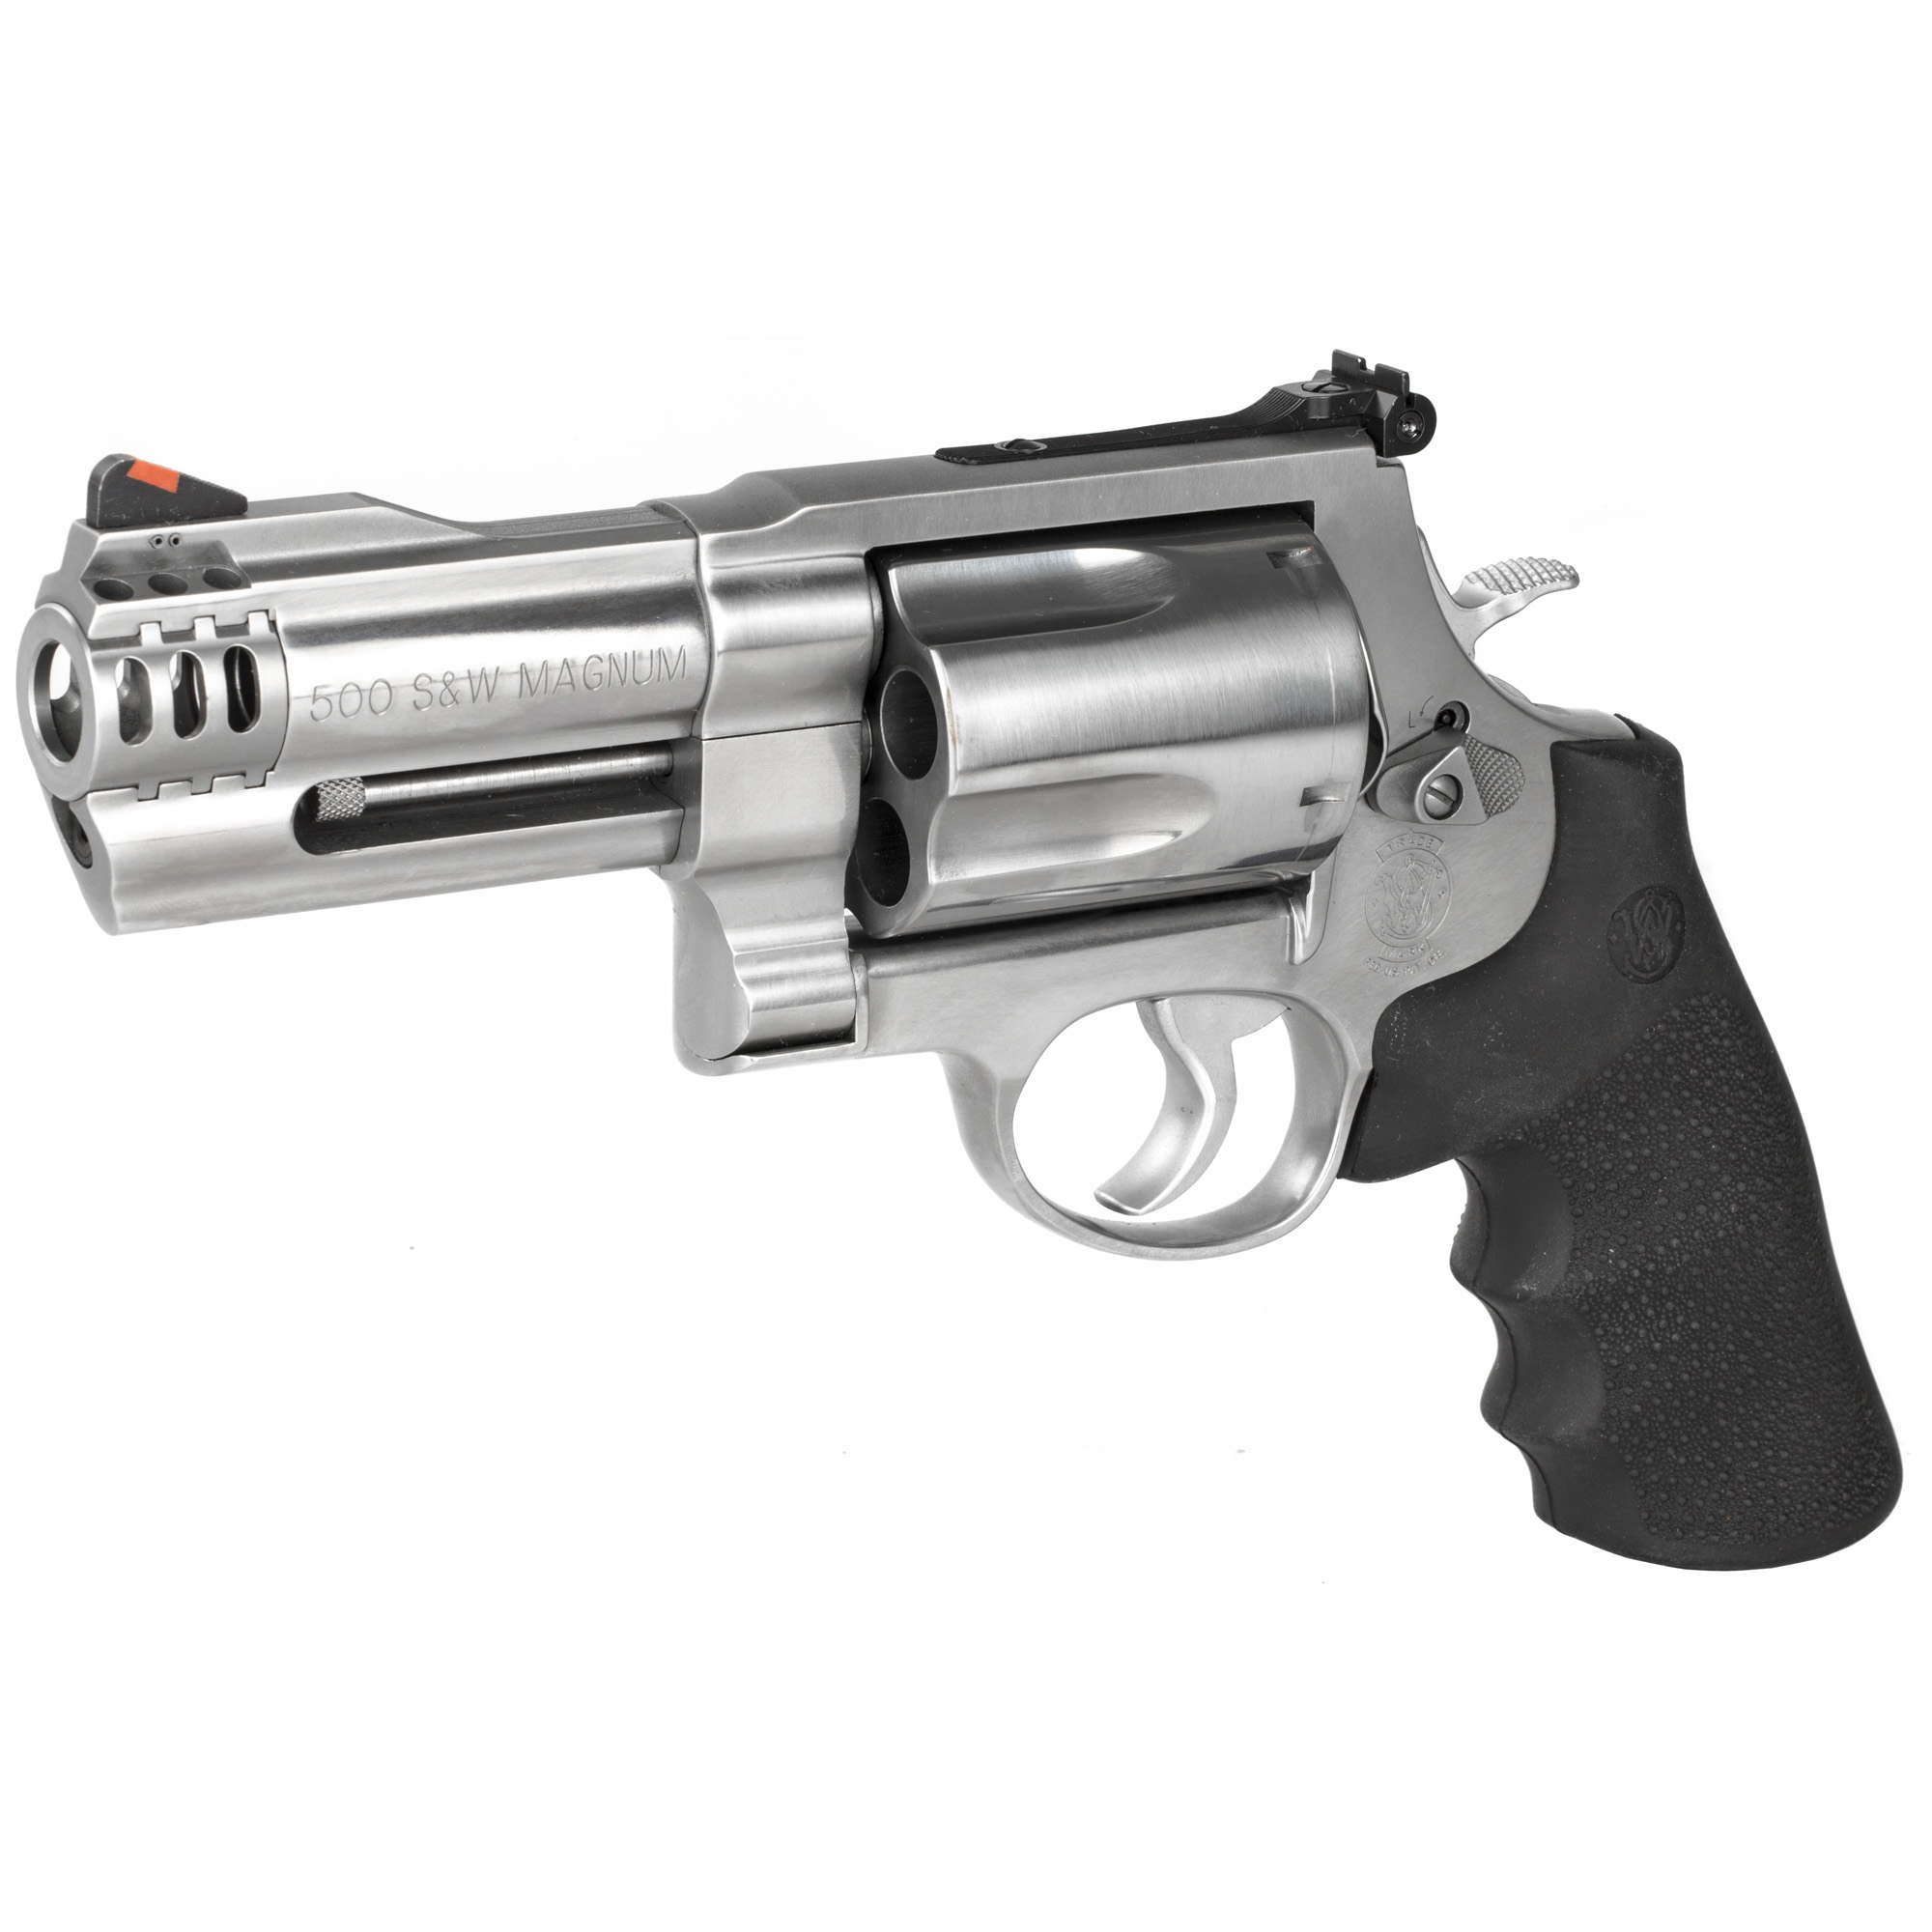 Smith & Wesson 500 - Revolvers At Gunbroker.com : 853858761